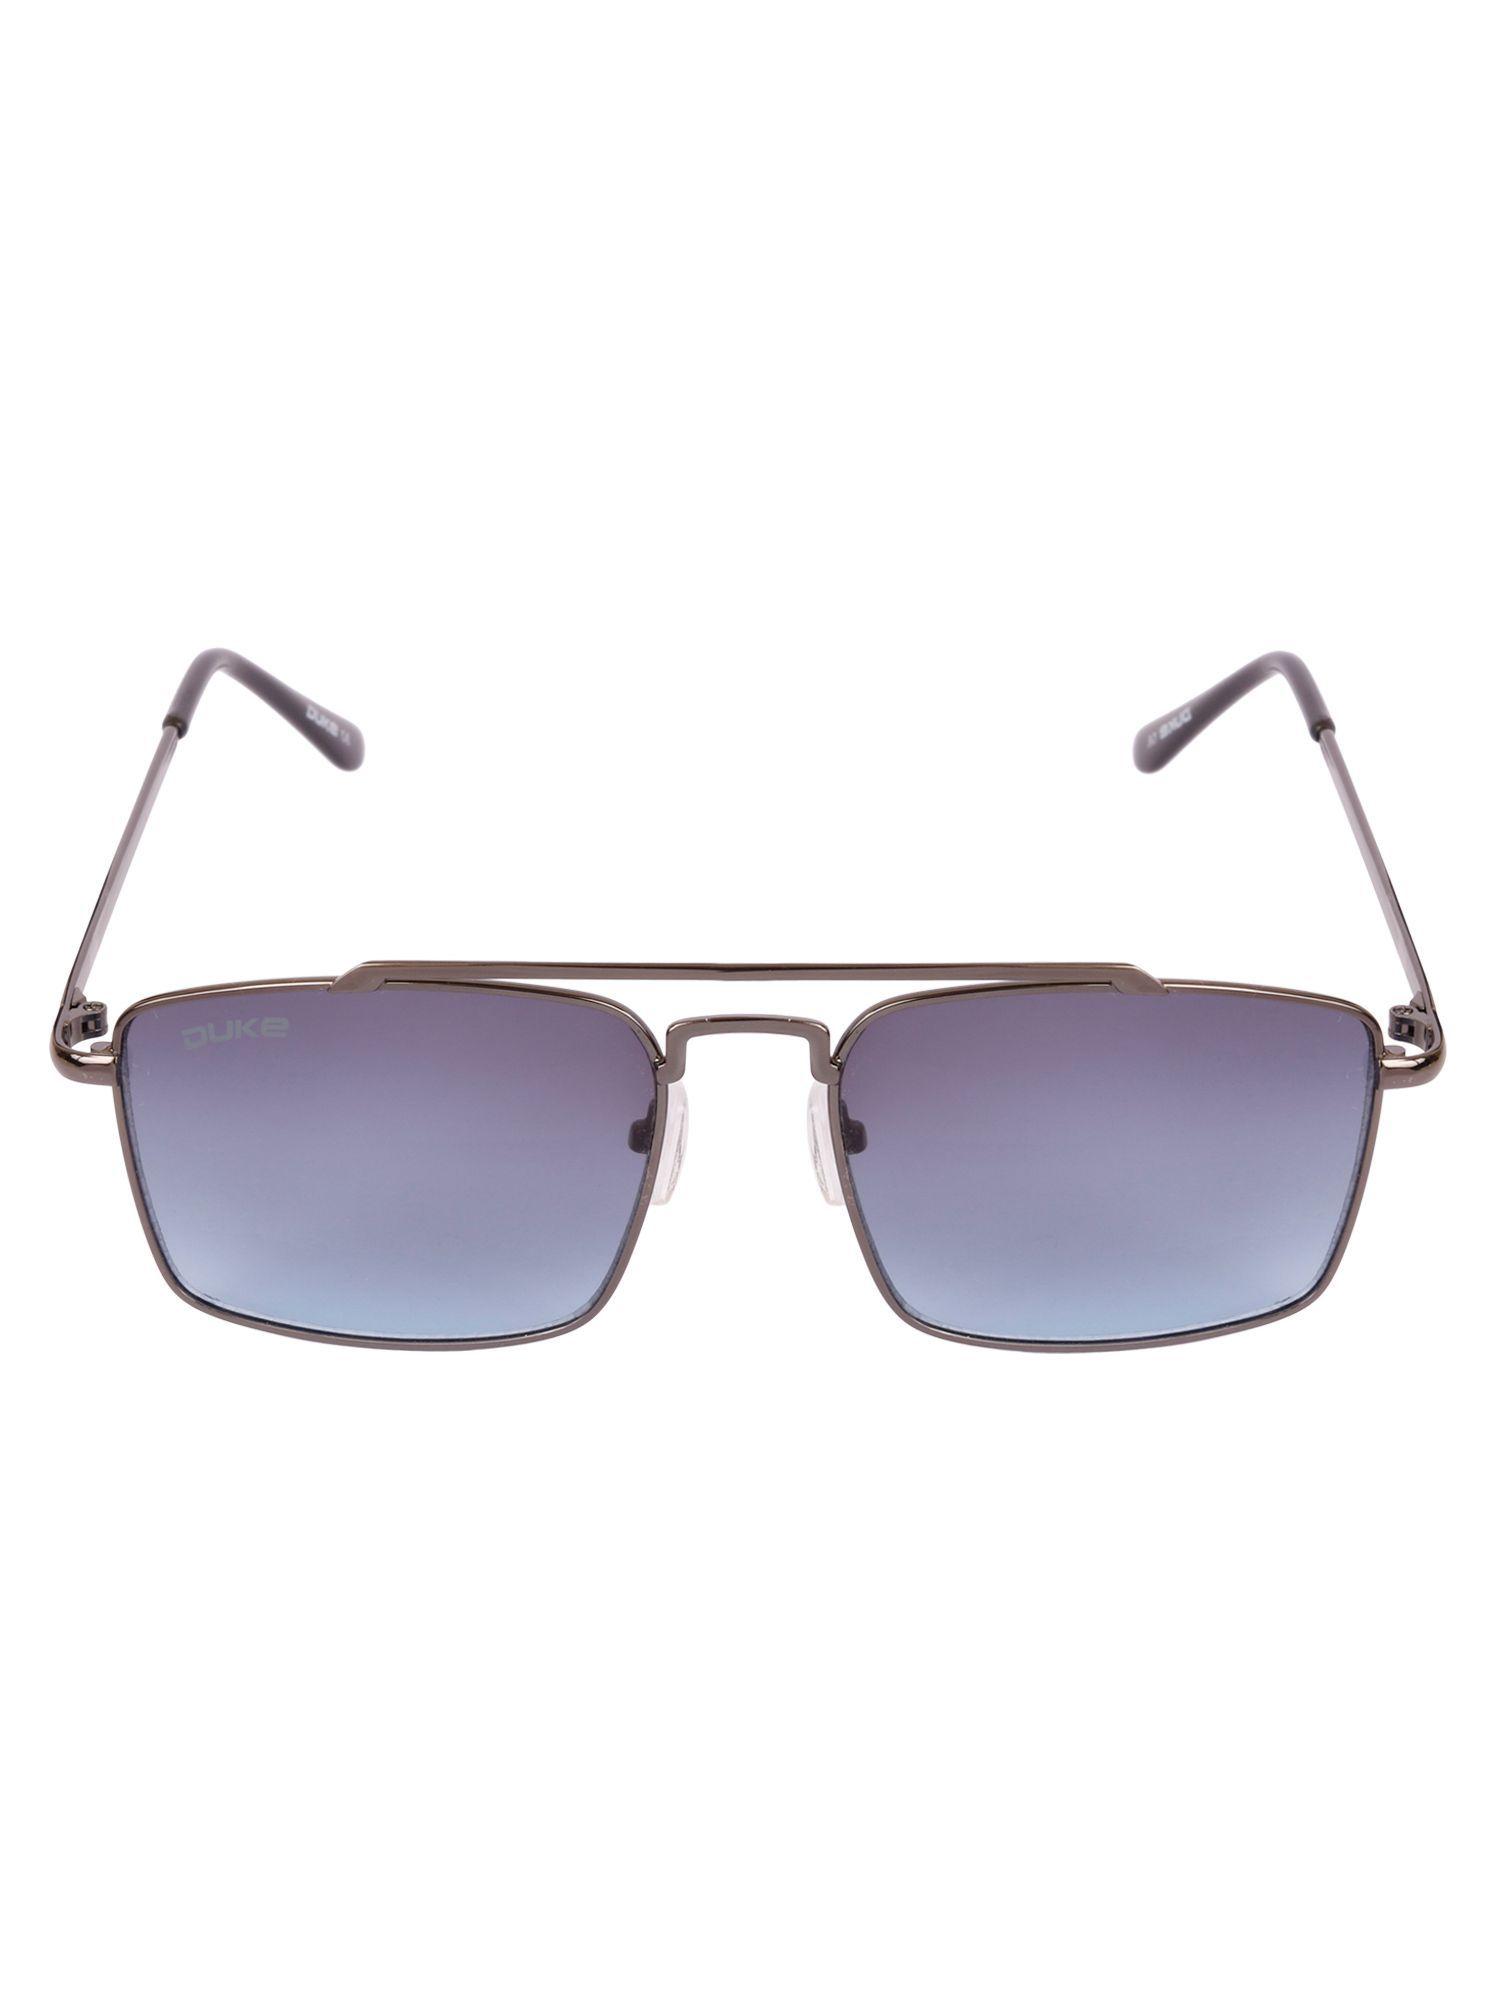 polycarbonate-uv-400-women-rectangular-sunglasses--duke-a1870-c2